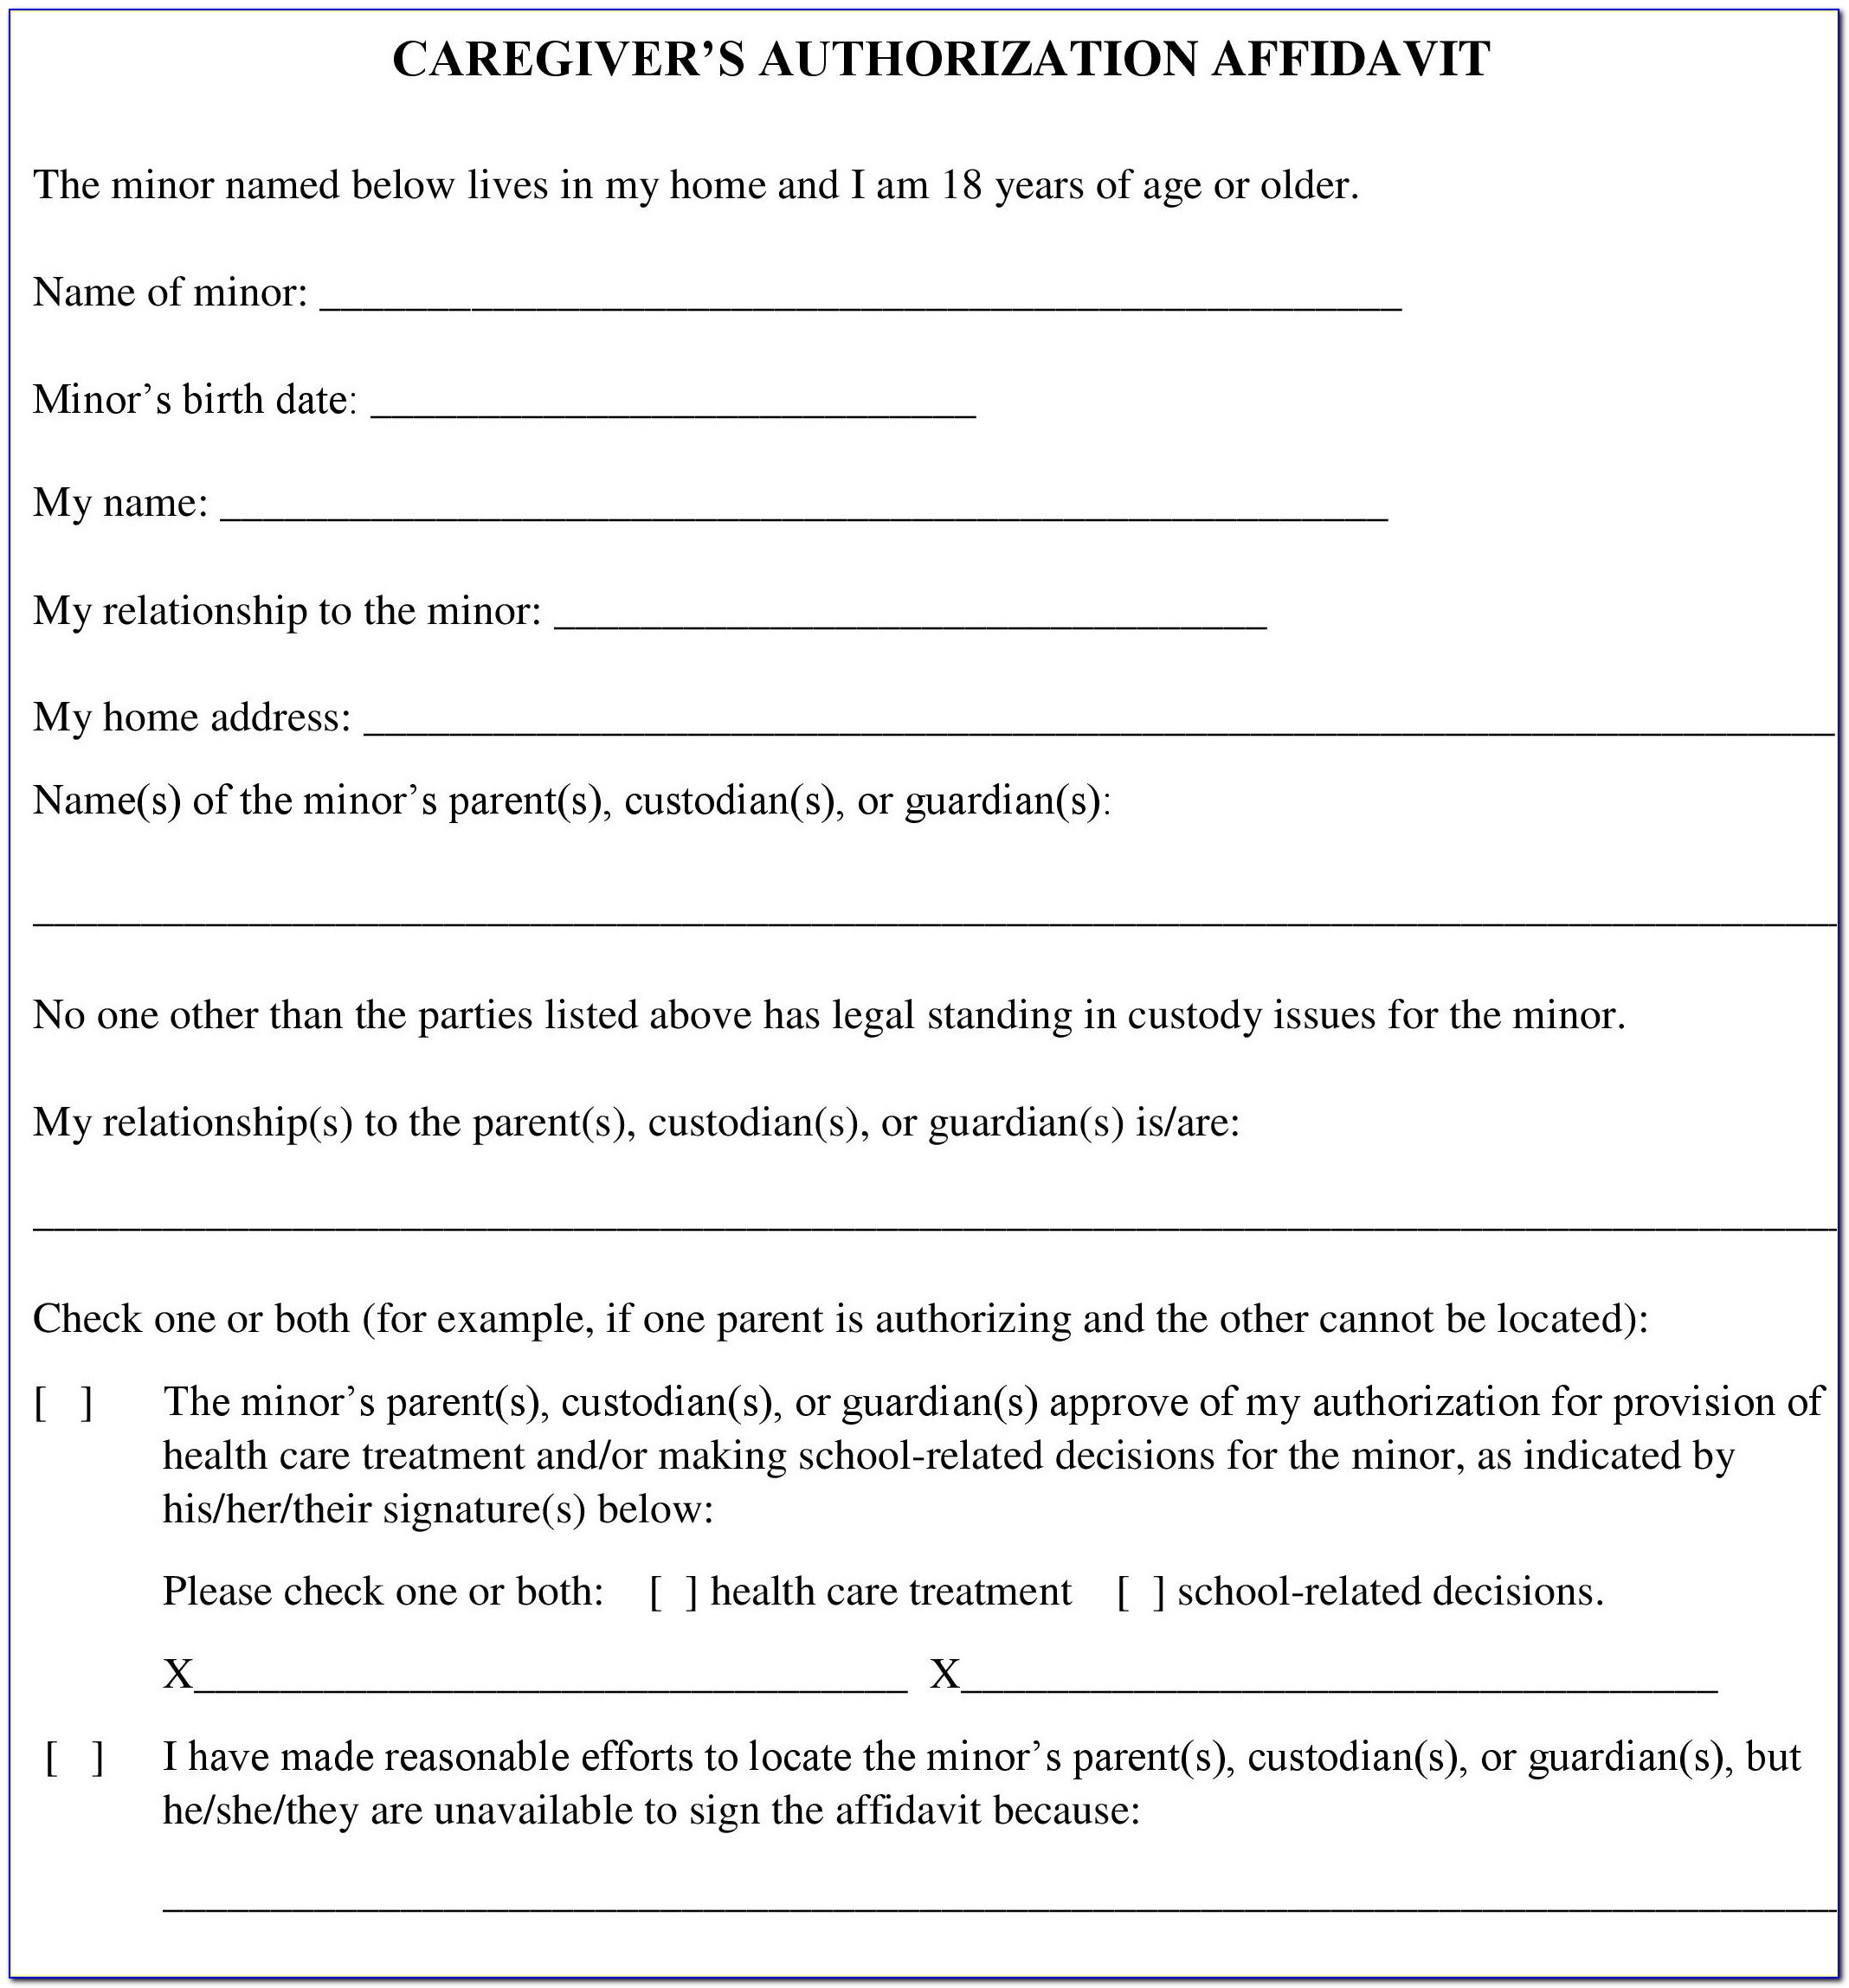 Child Care Affidavit Form